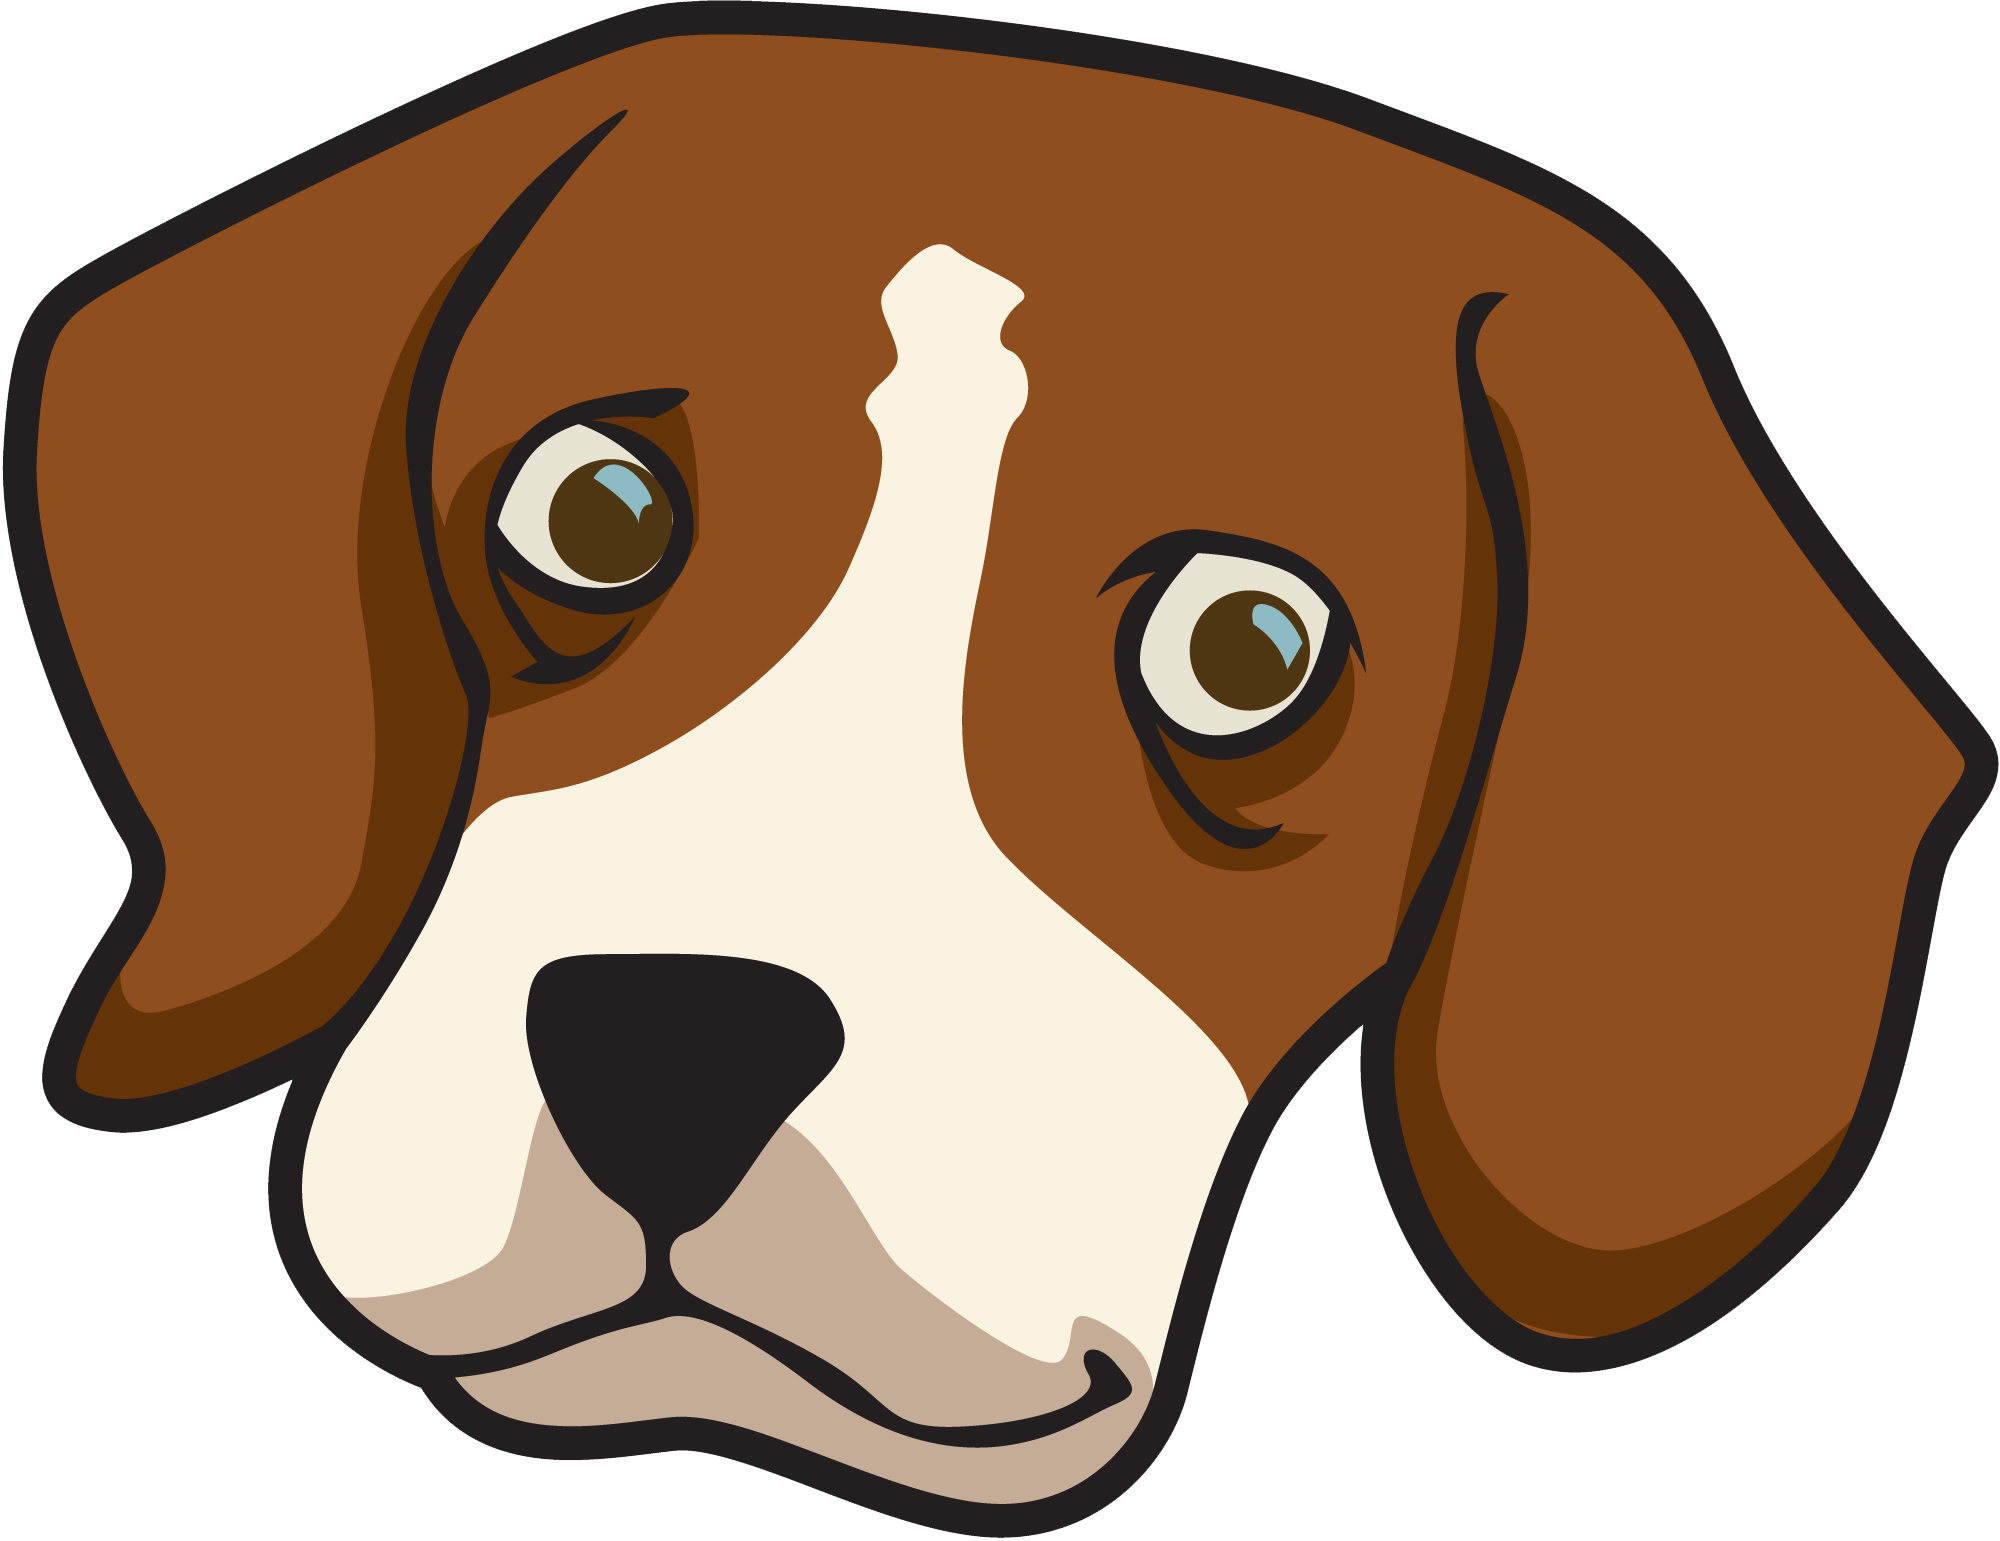 Puppy Dog Face PNG Transparent Image